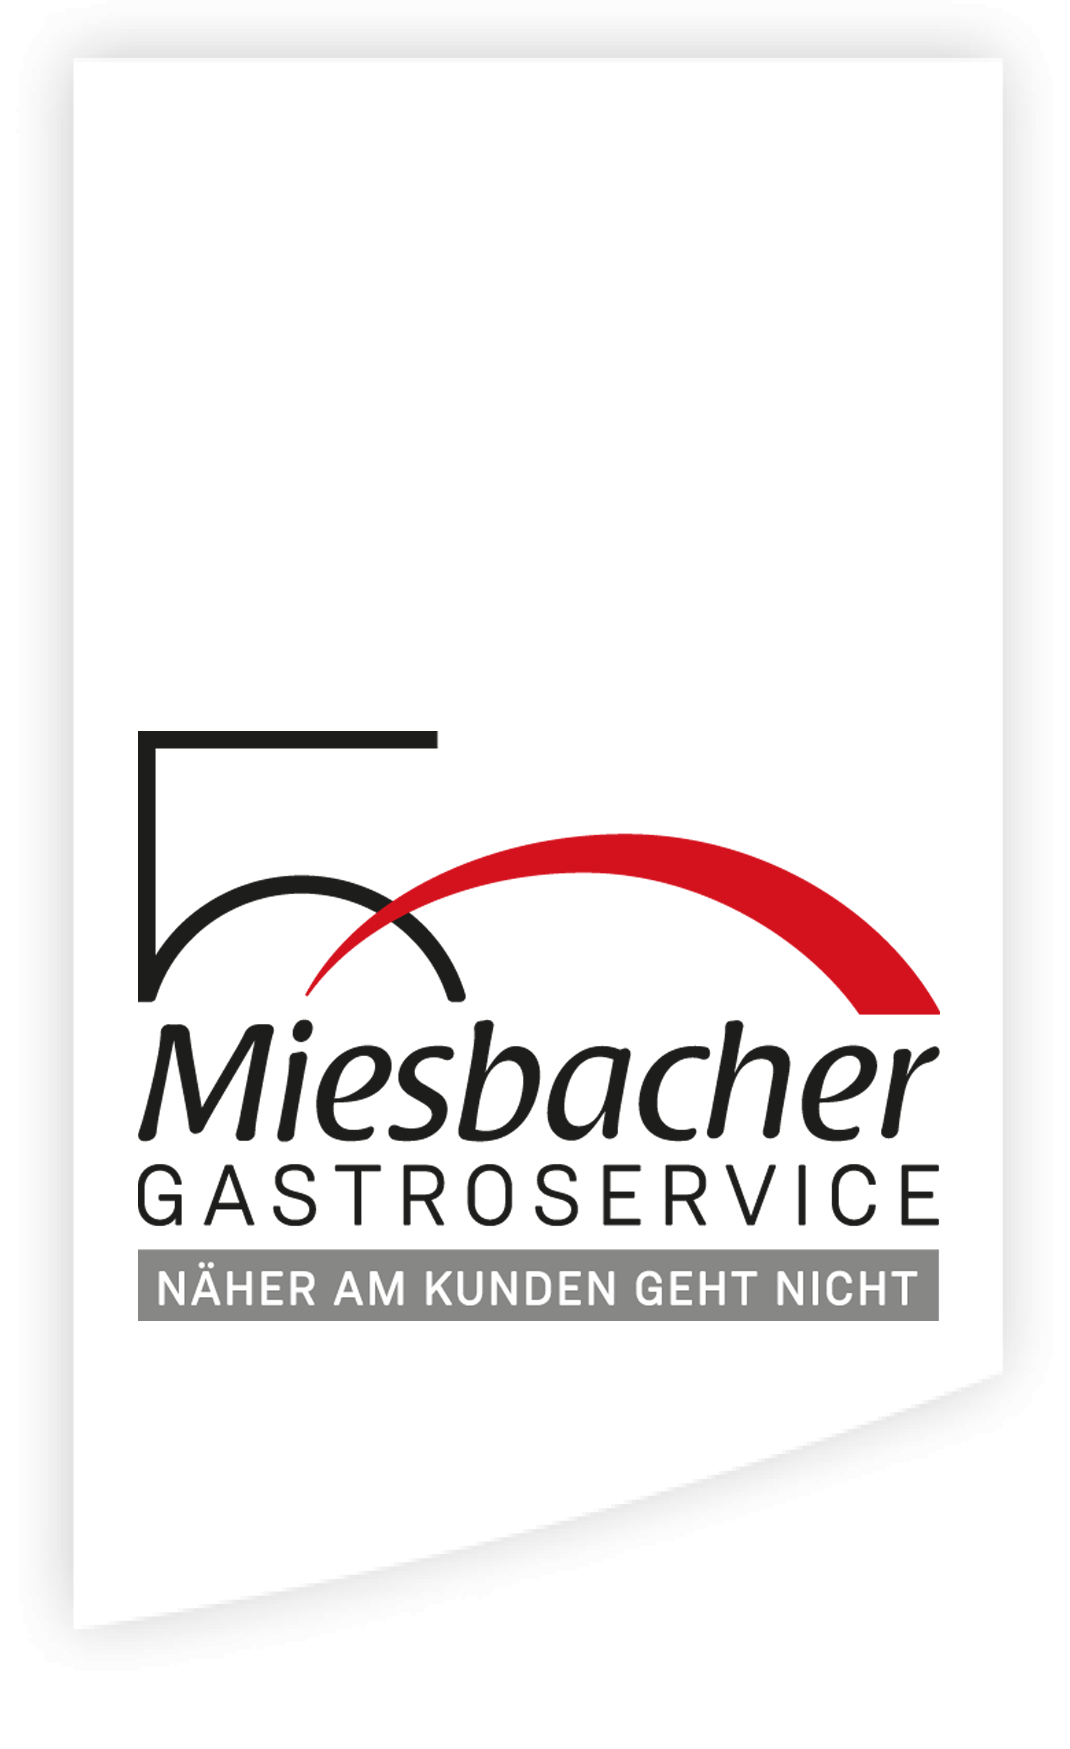 Miesbacher Gastroservice